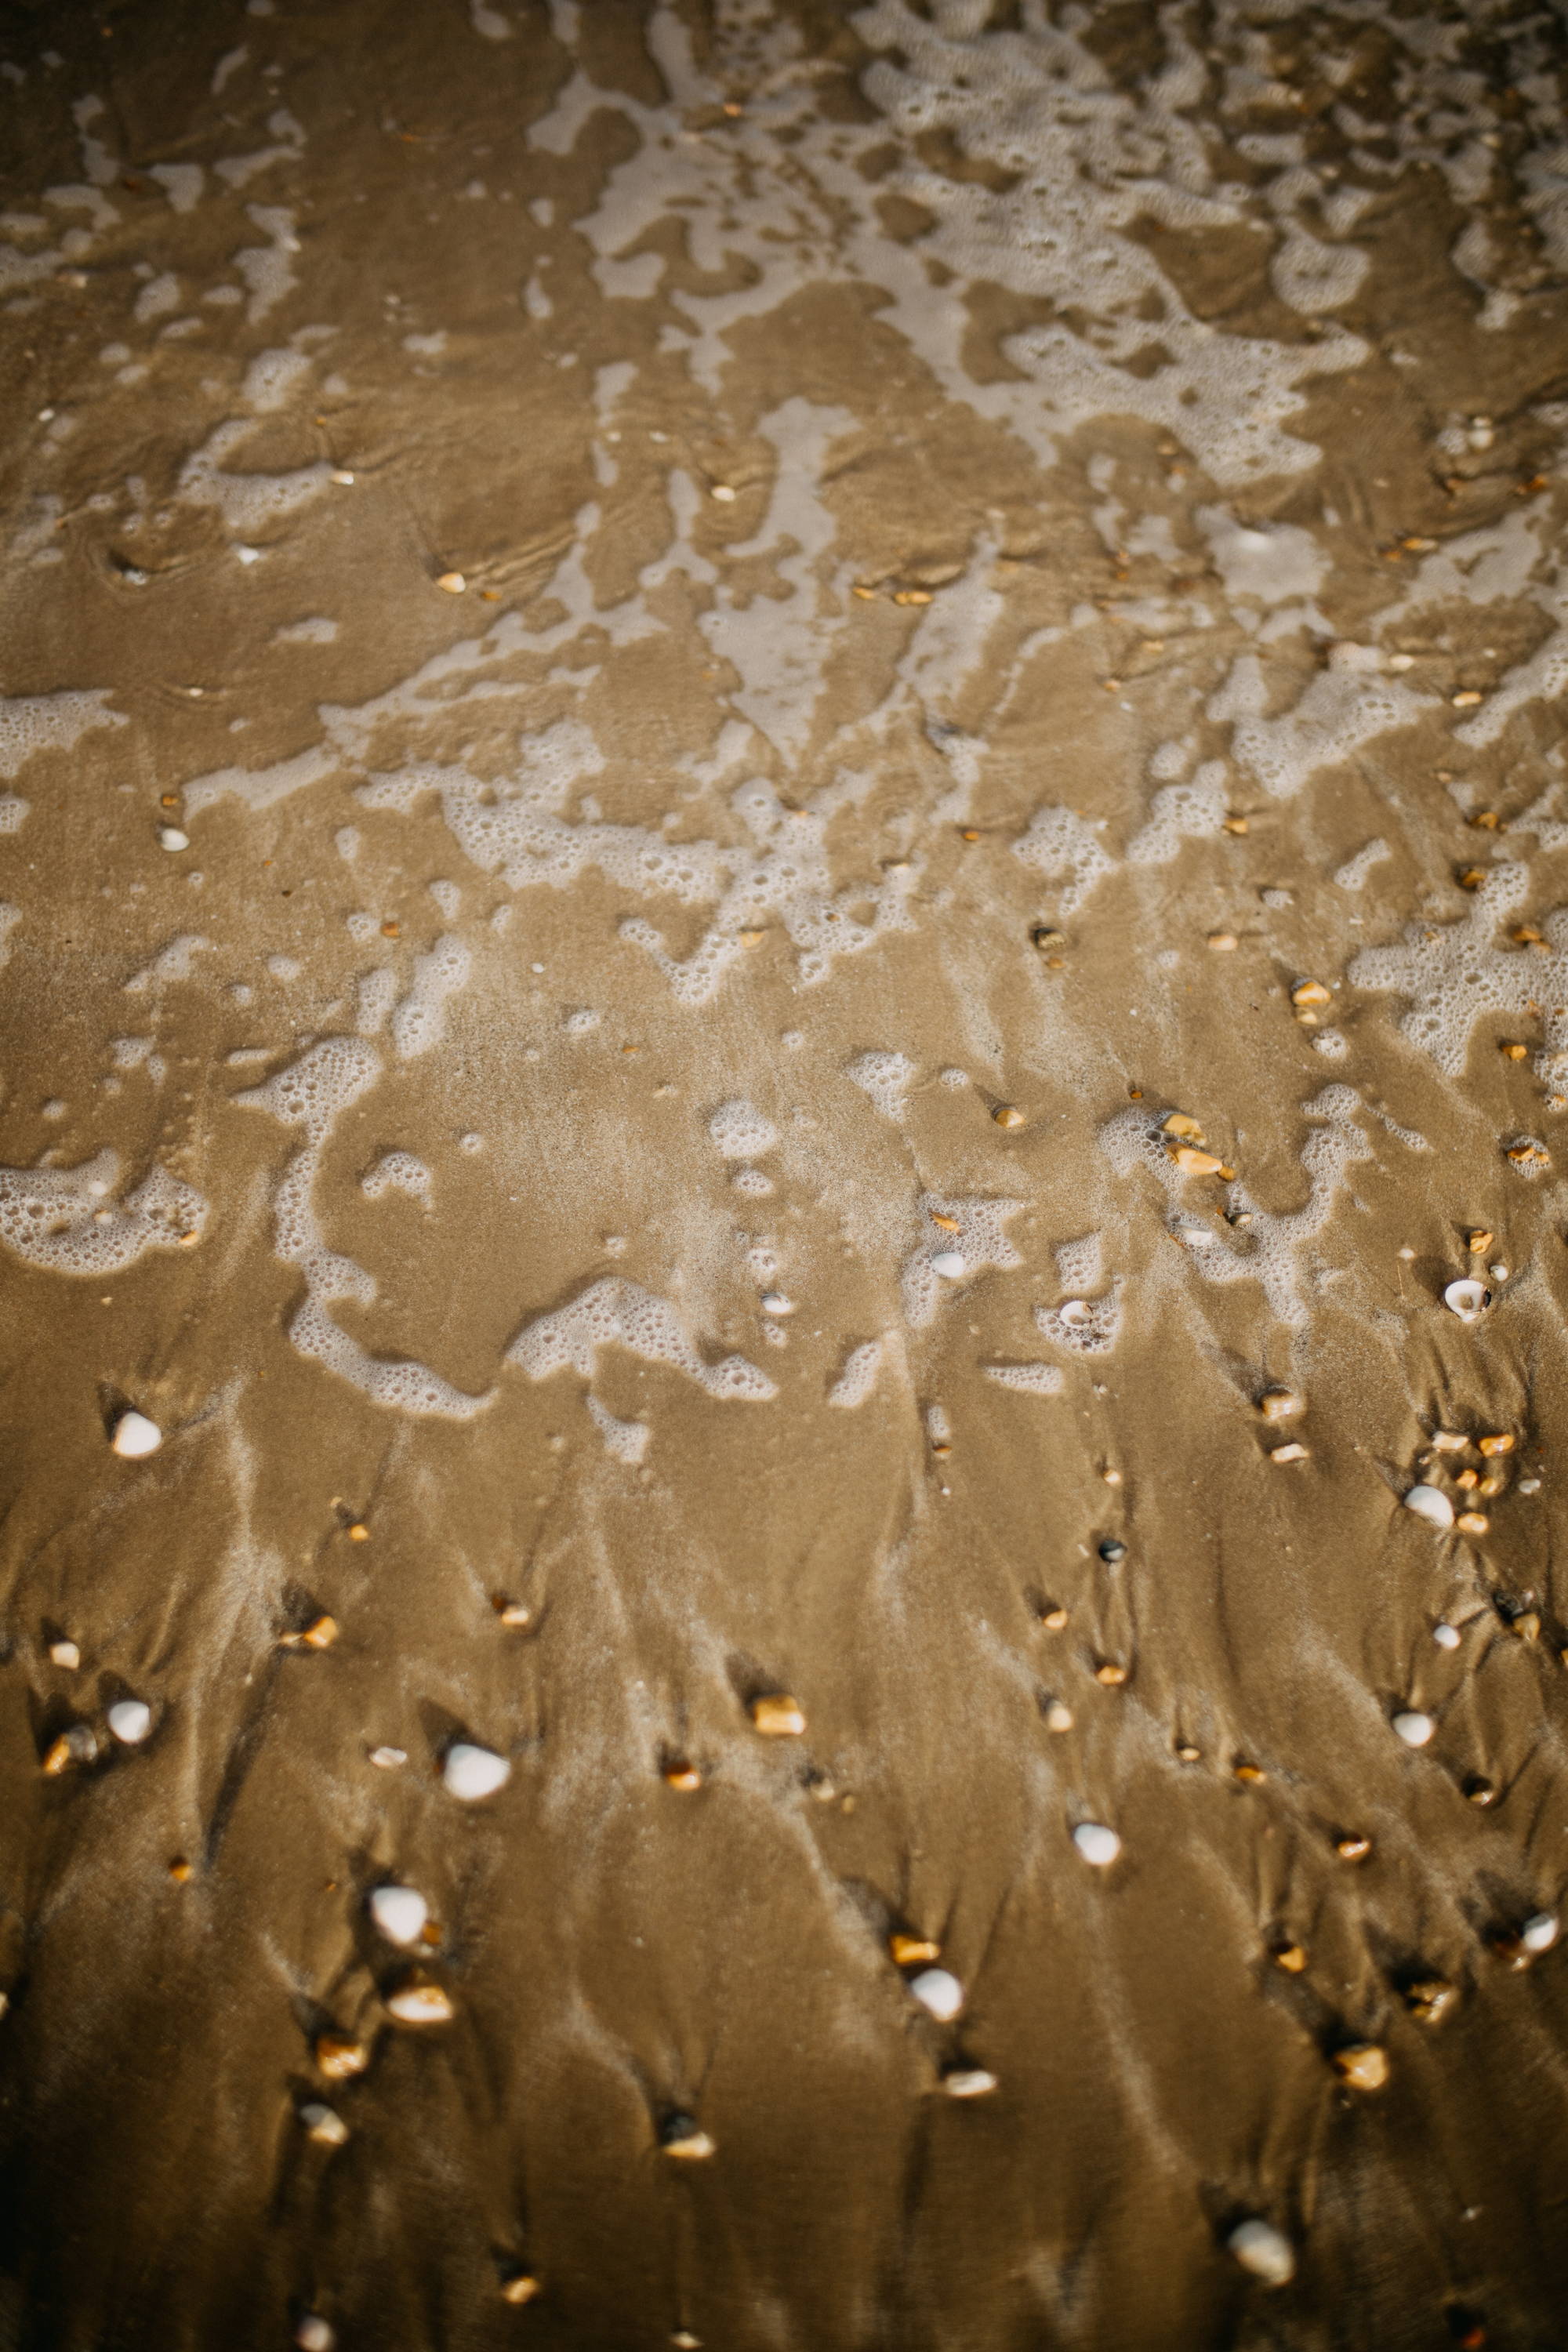 Seafoam on the sand